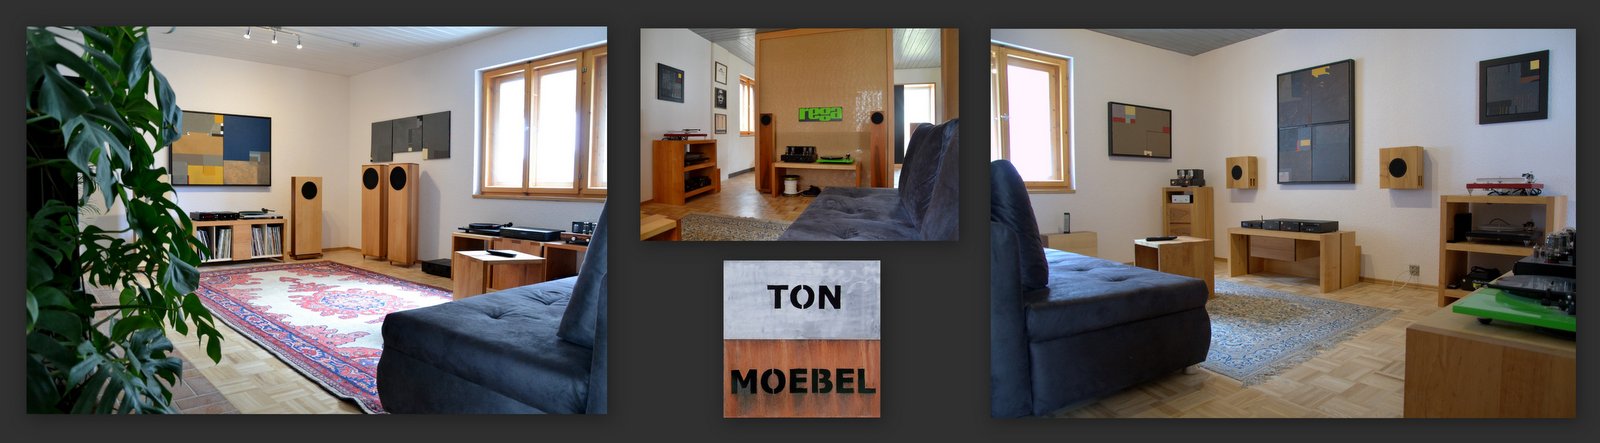 TonMoebel - Studio